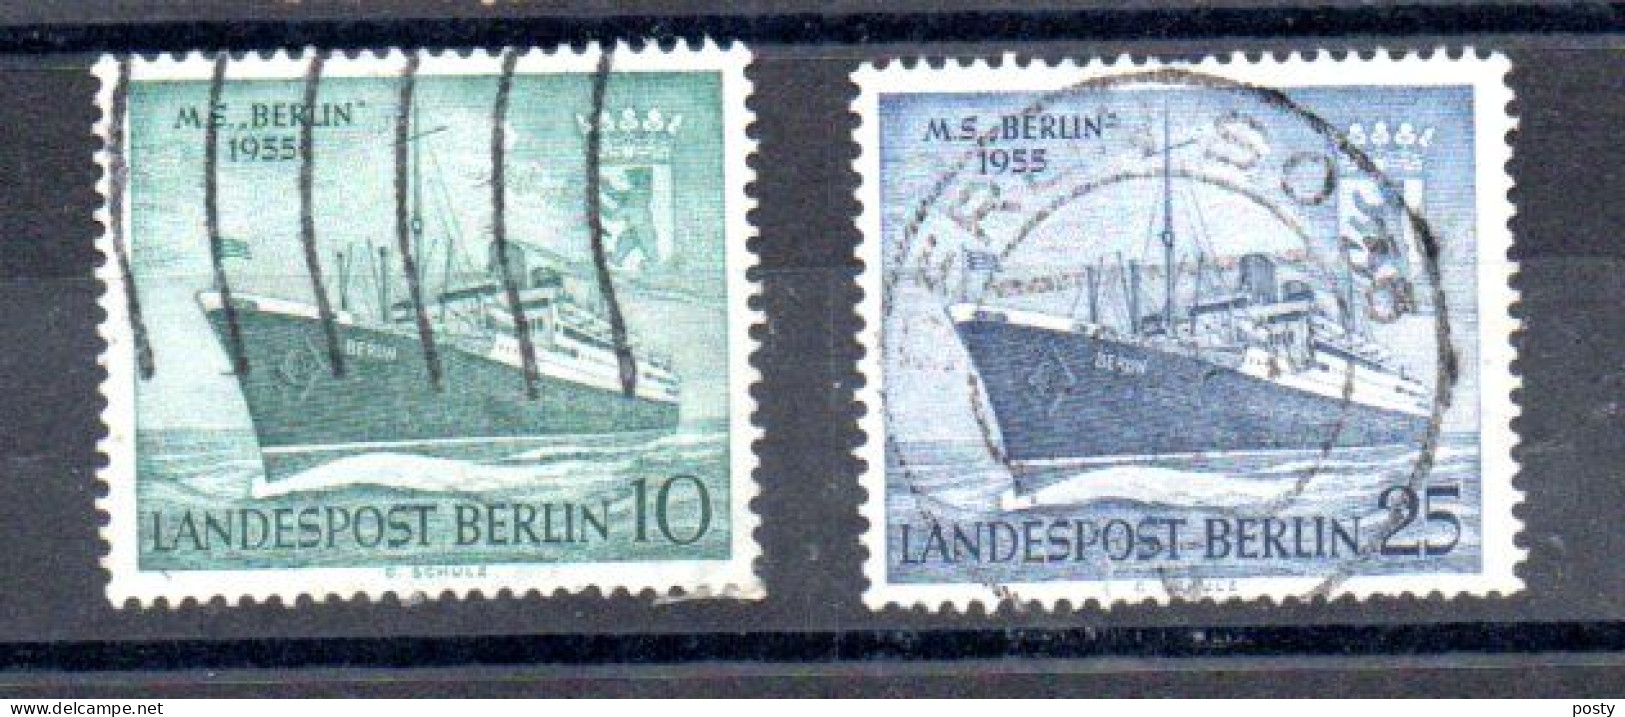 ALLEMAGNE - GERMANY - BERLIN - 1955 - M.S BERLIN - PAQUEBOT - SCHIFF - OCEANLINER - 10 + 25 - Oblitéré - Used - - Oblitérés